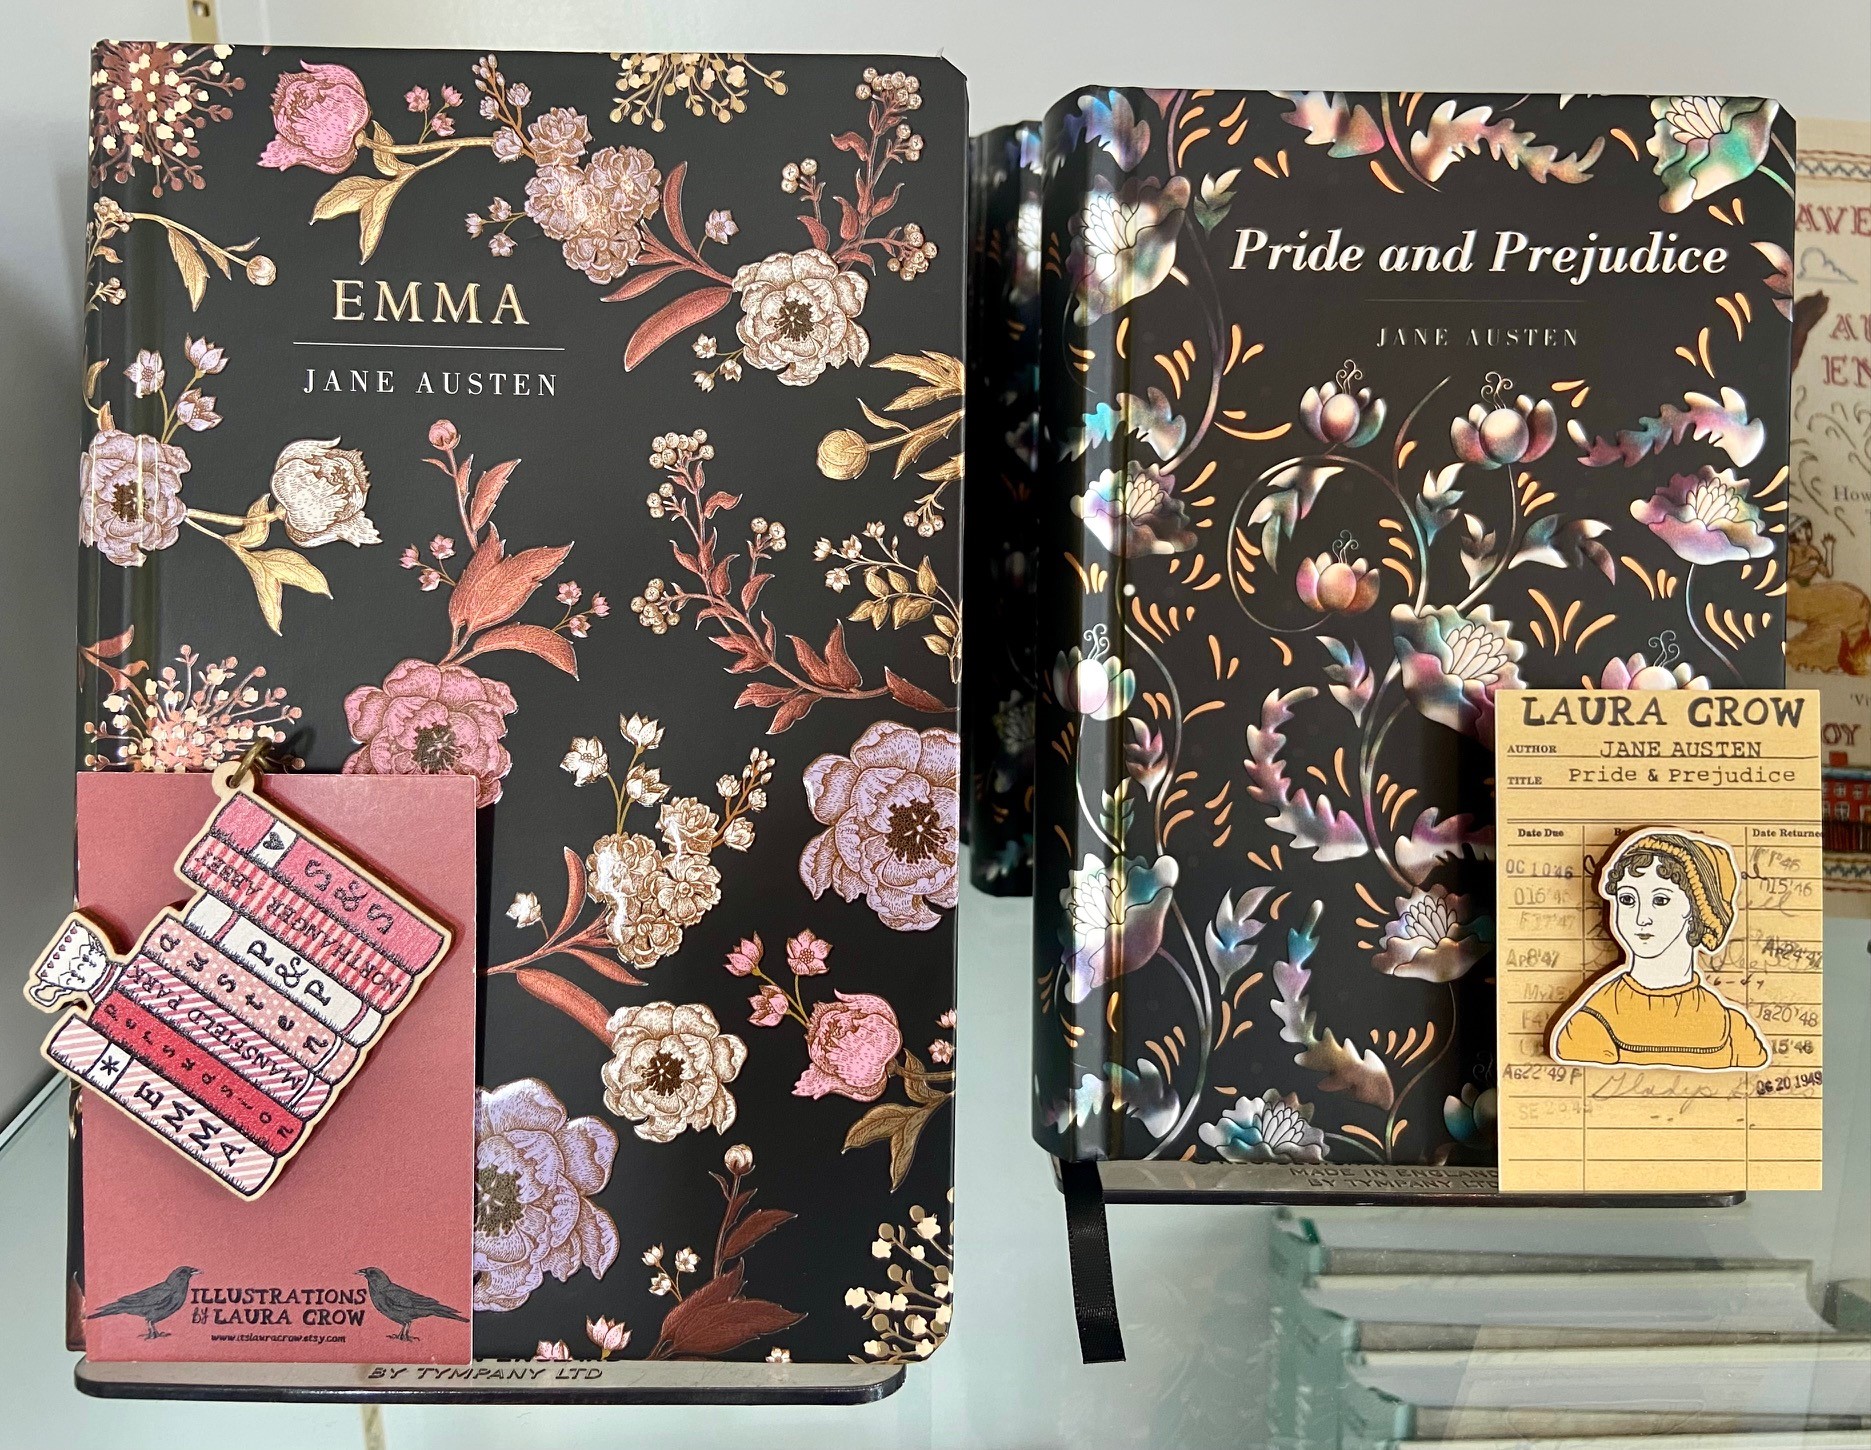 Emma and Pride and Prejudice books by Jane Austen